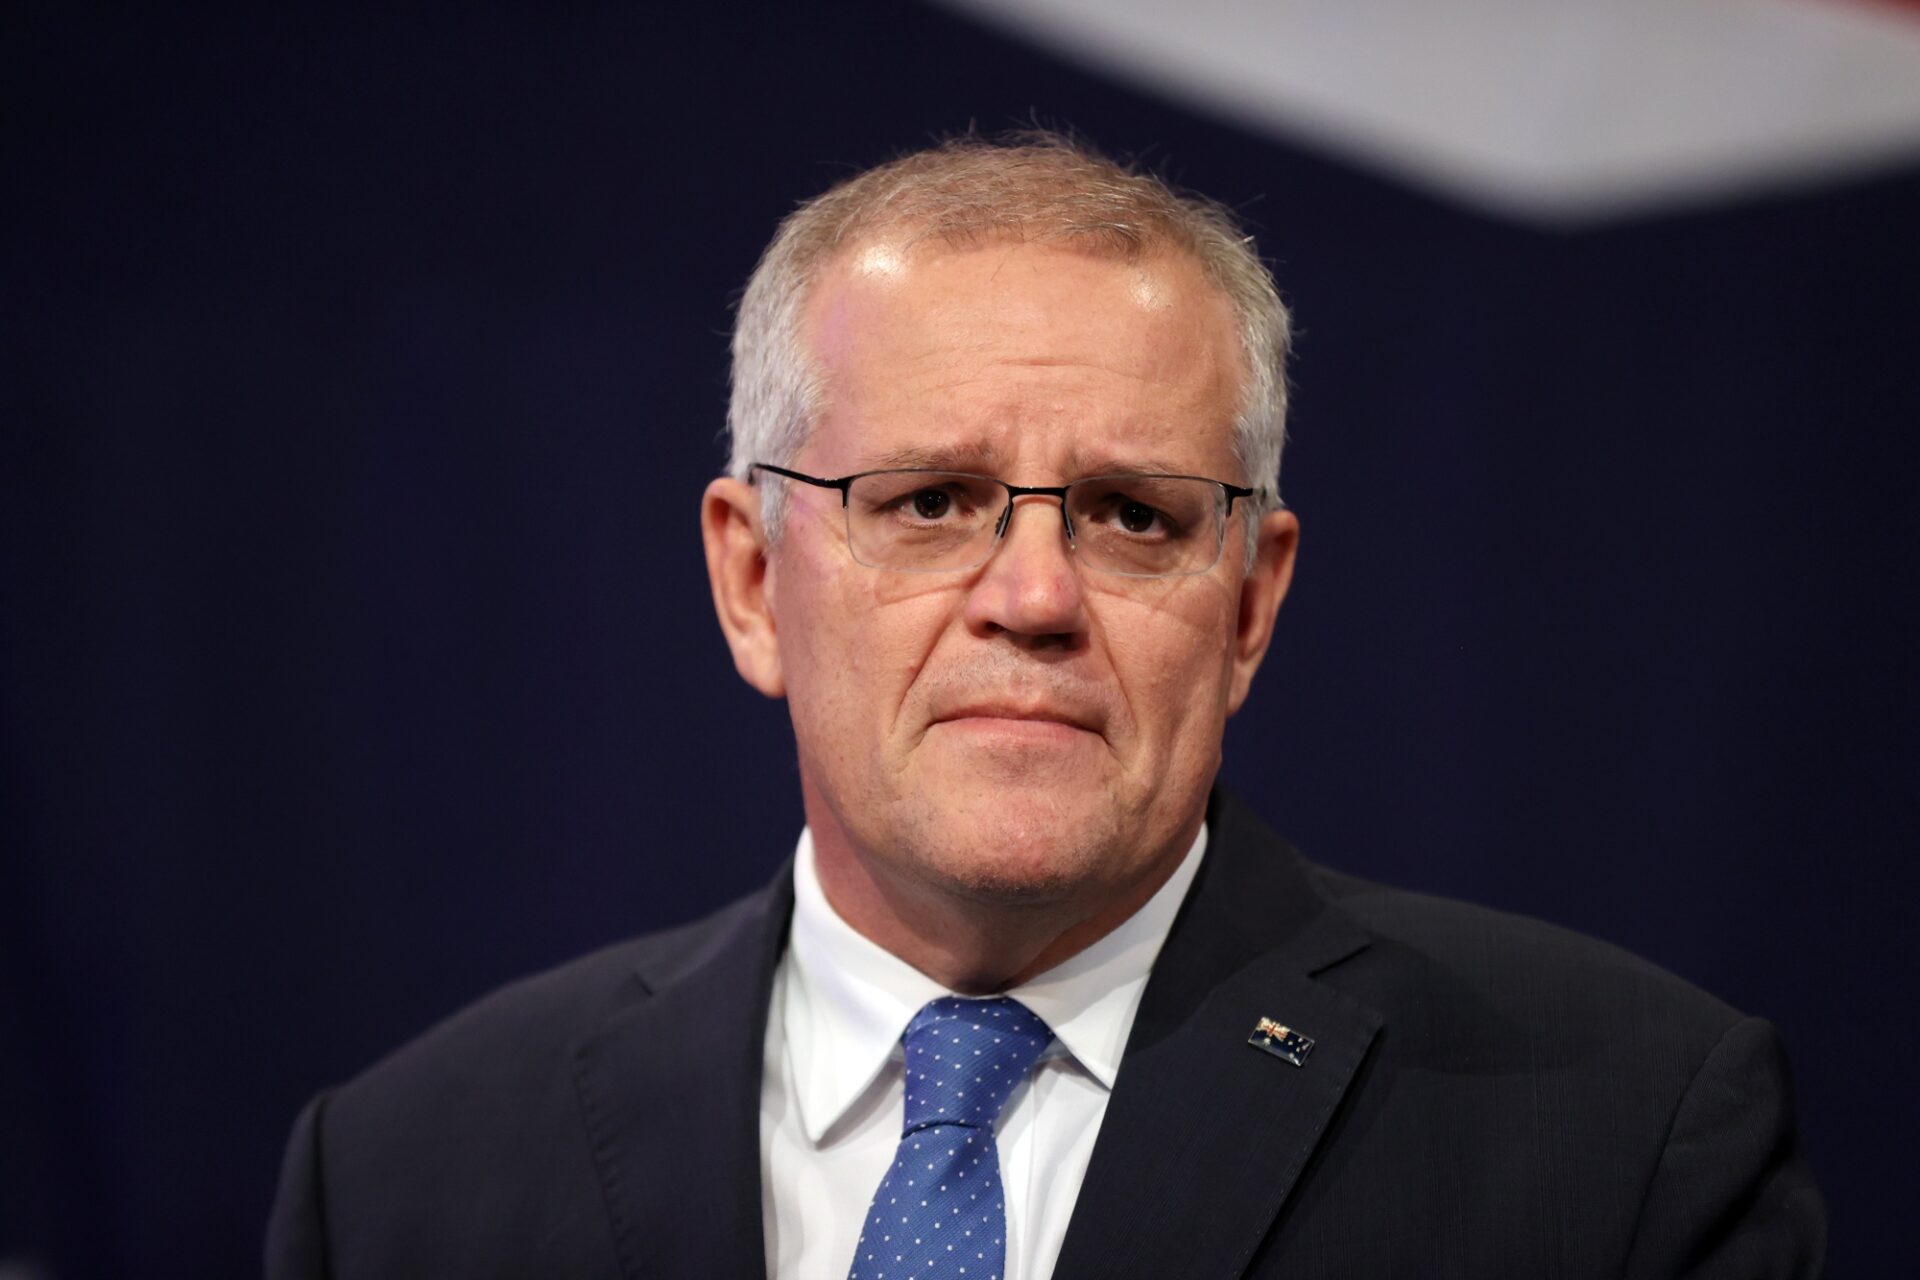 Scott Morrison, ex primer ministro australiano, censurado por cargos secretos en el ministerio